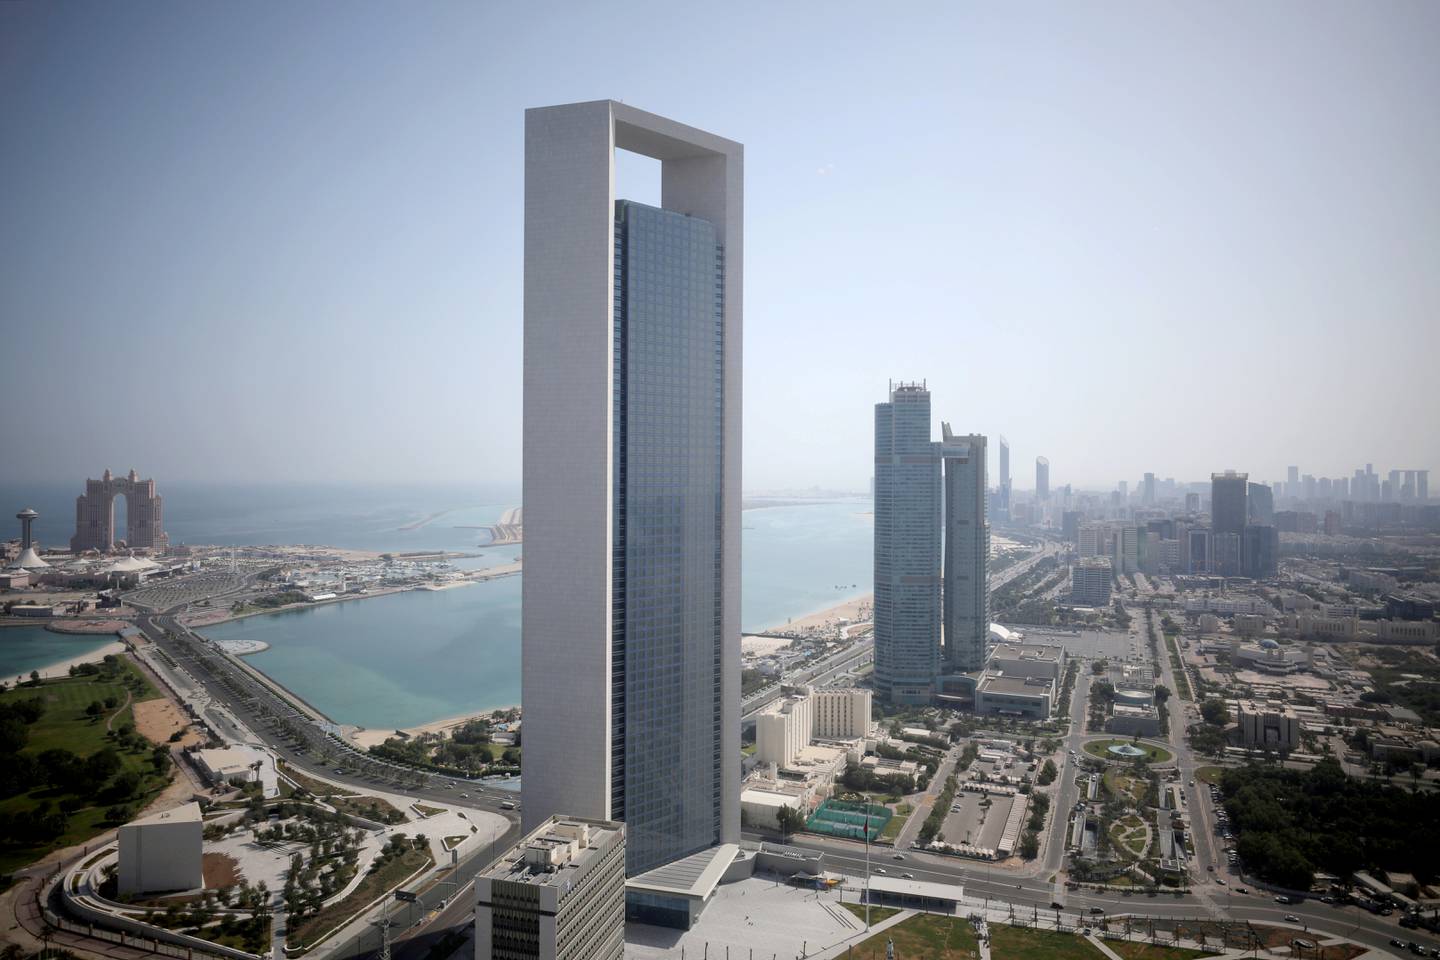 HOK designed the Adnoc headquarters on the Corniche in the UAE capital. Christopher Pike